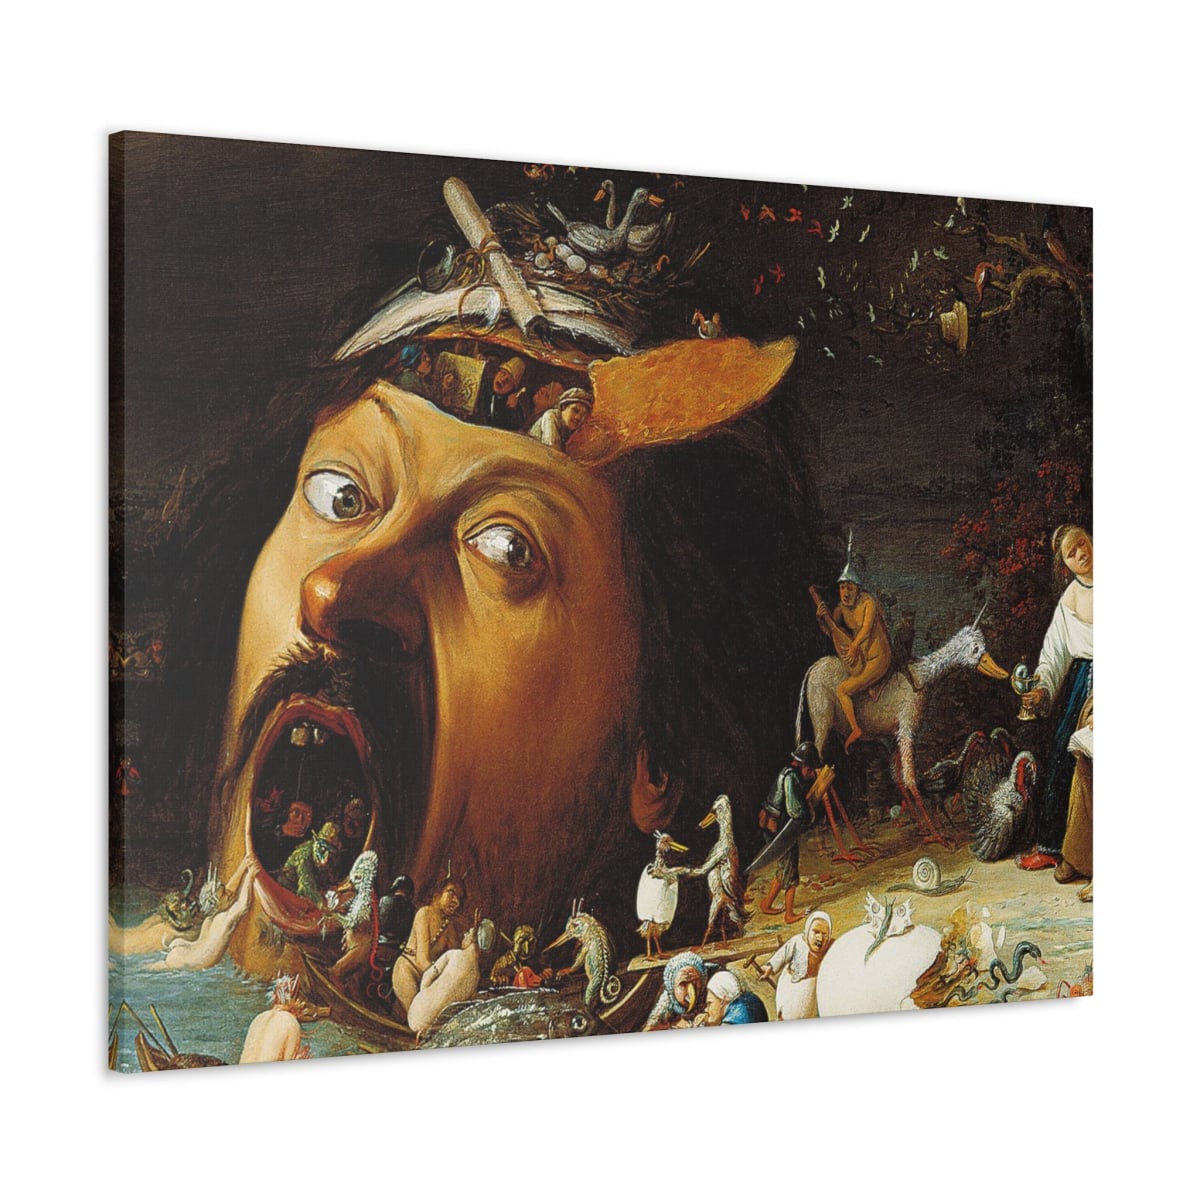 Experience Artistic Splendor: Bosch’s Temptation of St. Anthony